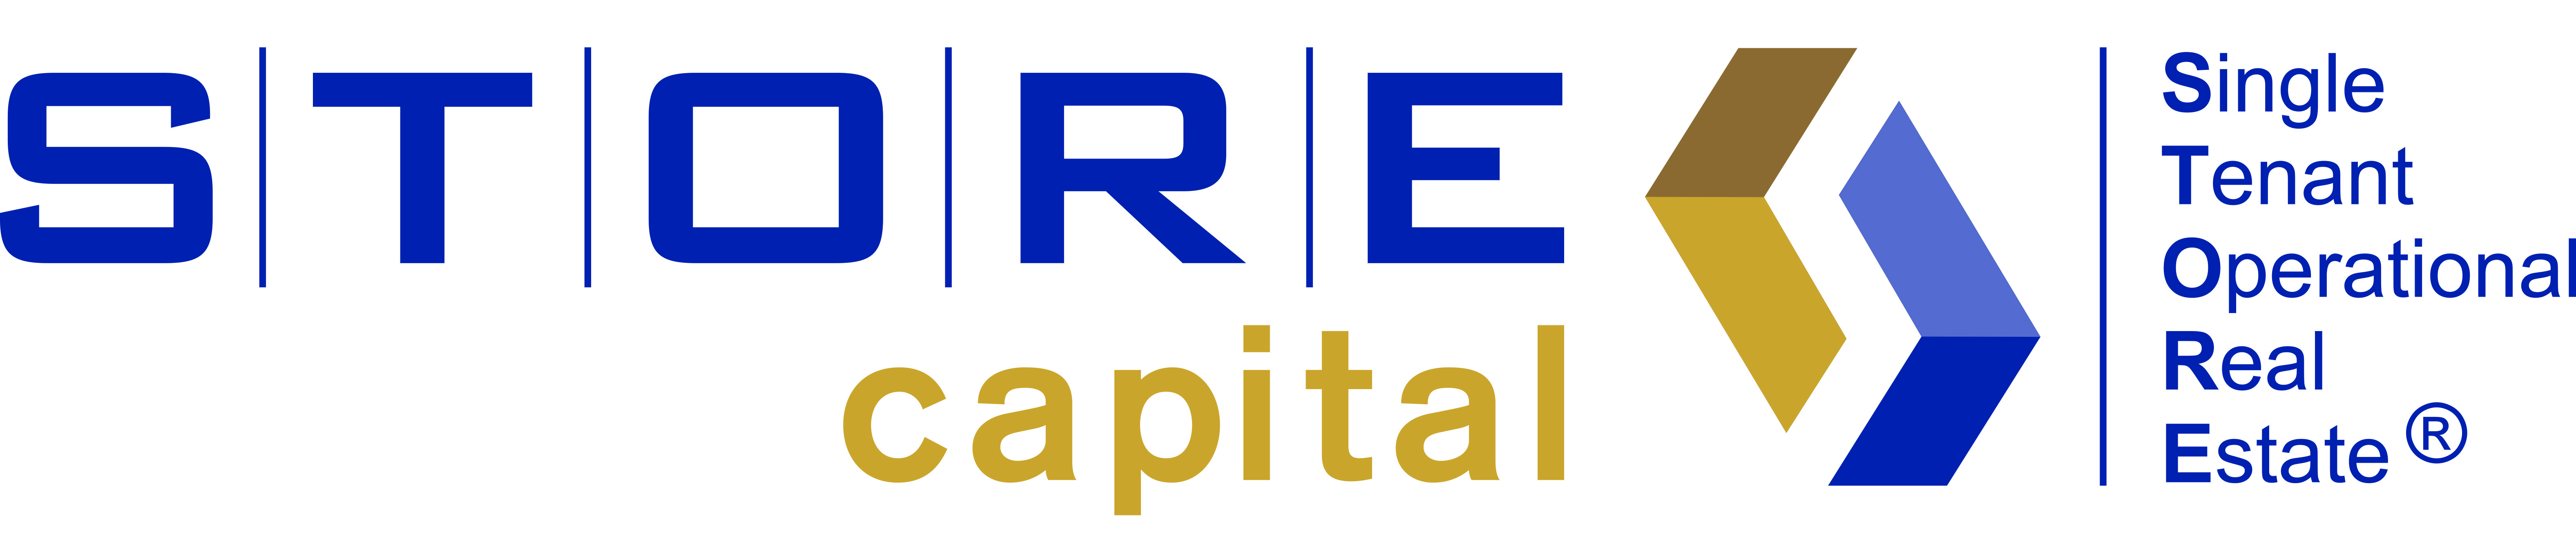 STORE Capital Logo_1HR